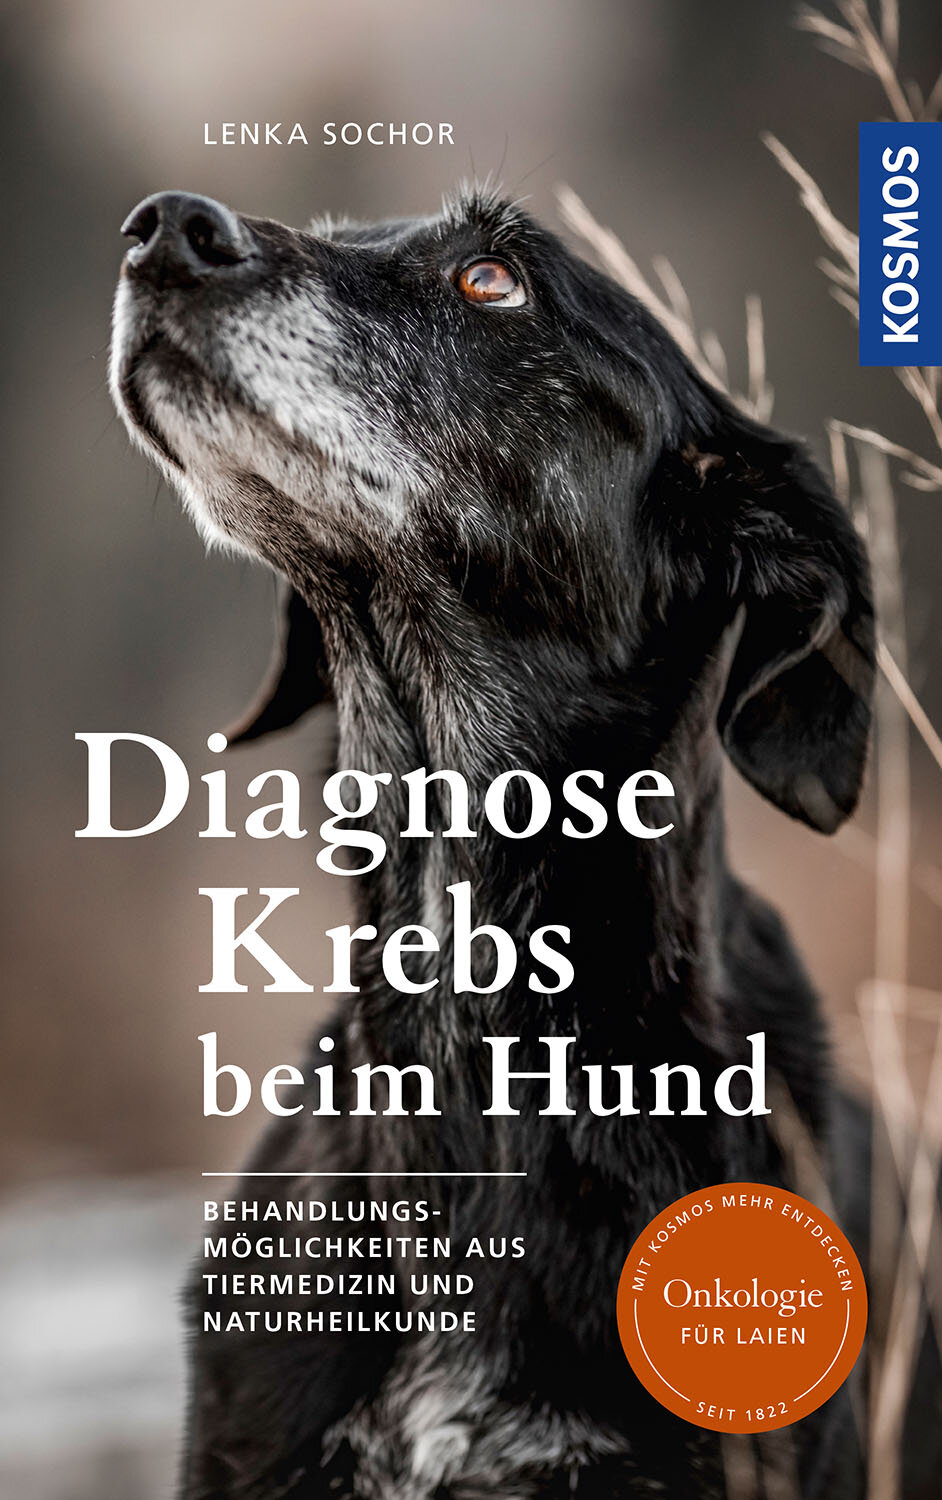 Diagnose Krebs beim Hund